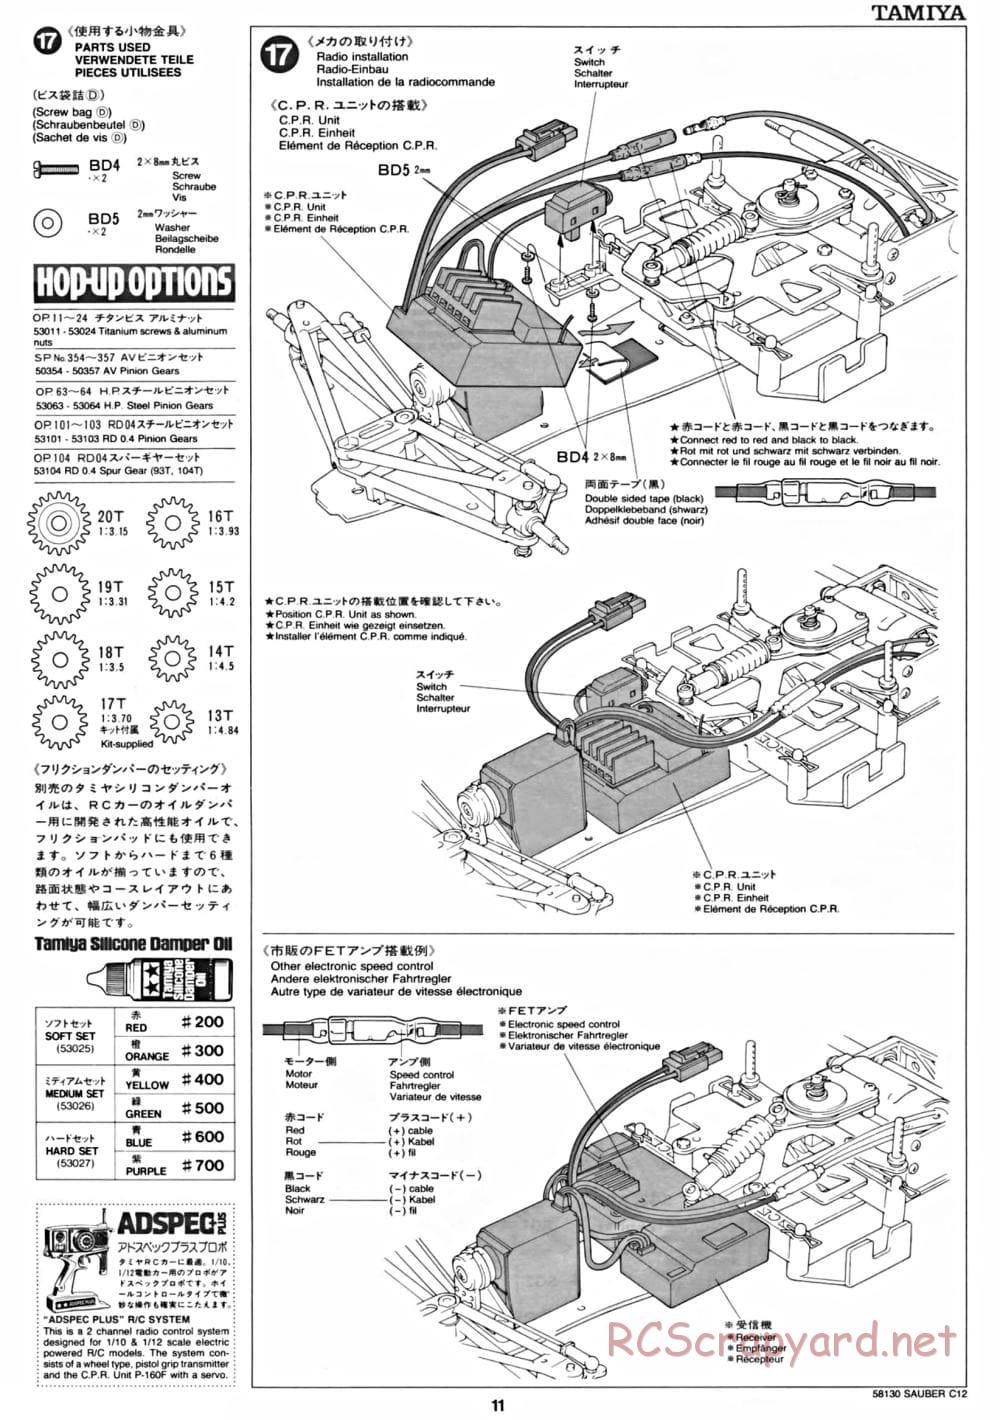 Tamiya - Sauber C12 - F103 Chassis - Manual - Page 11